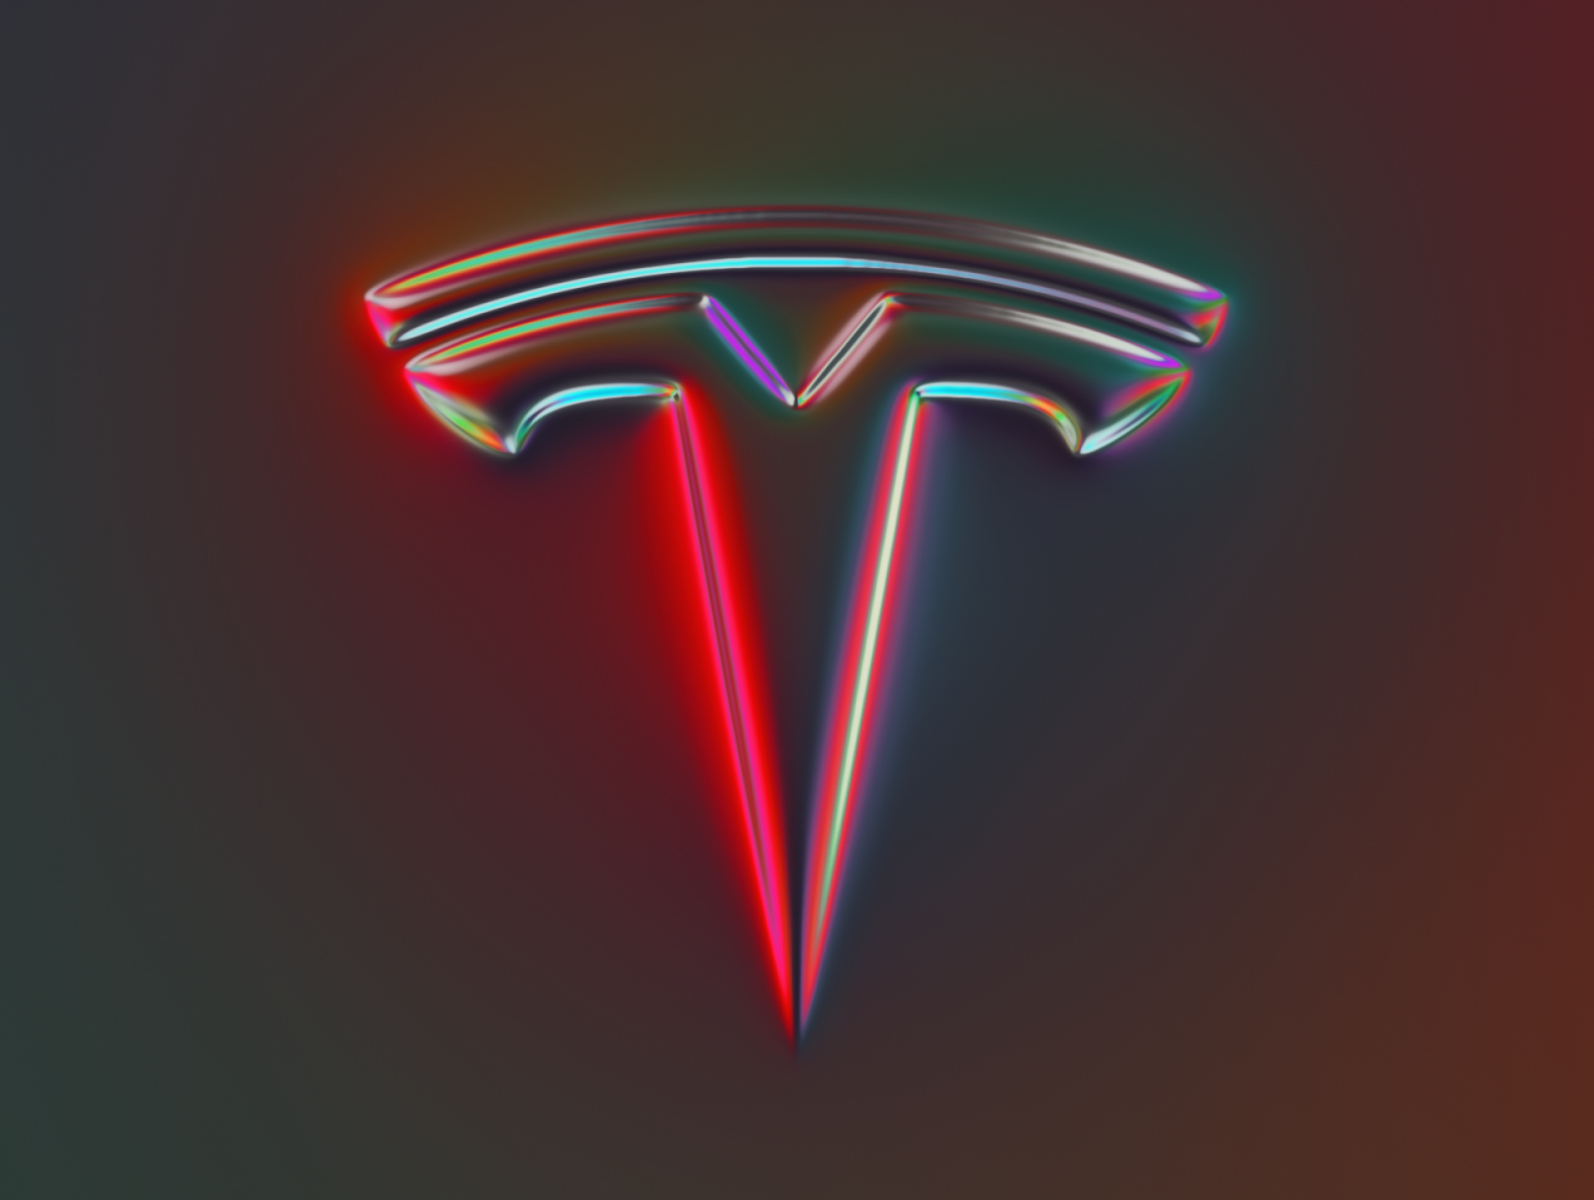 36 logos - Tesla elon musk tesla rebranding rebrand logotype logo design logo 36daysoftype typography colors illustration wwp generative filter forge abstract art design